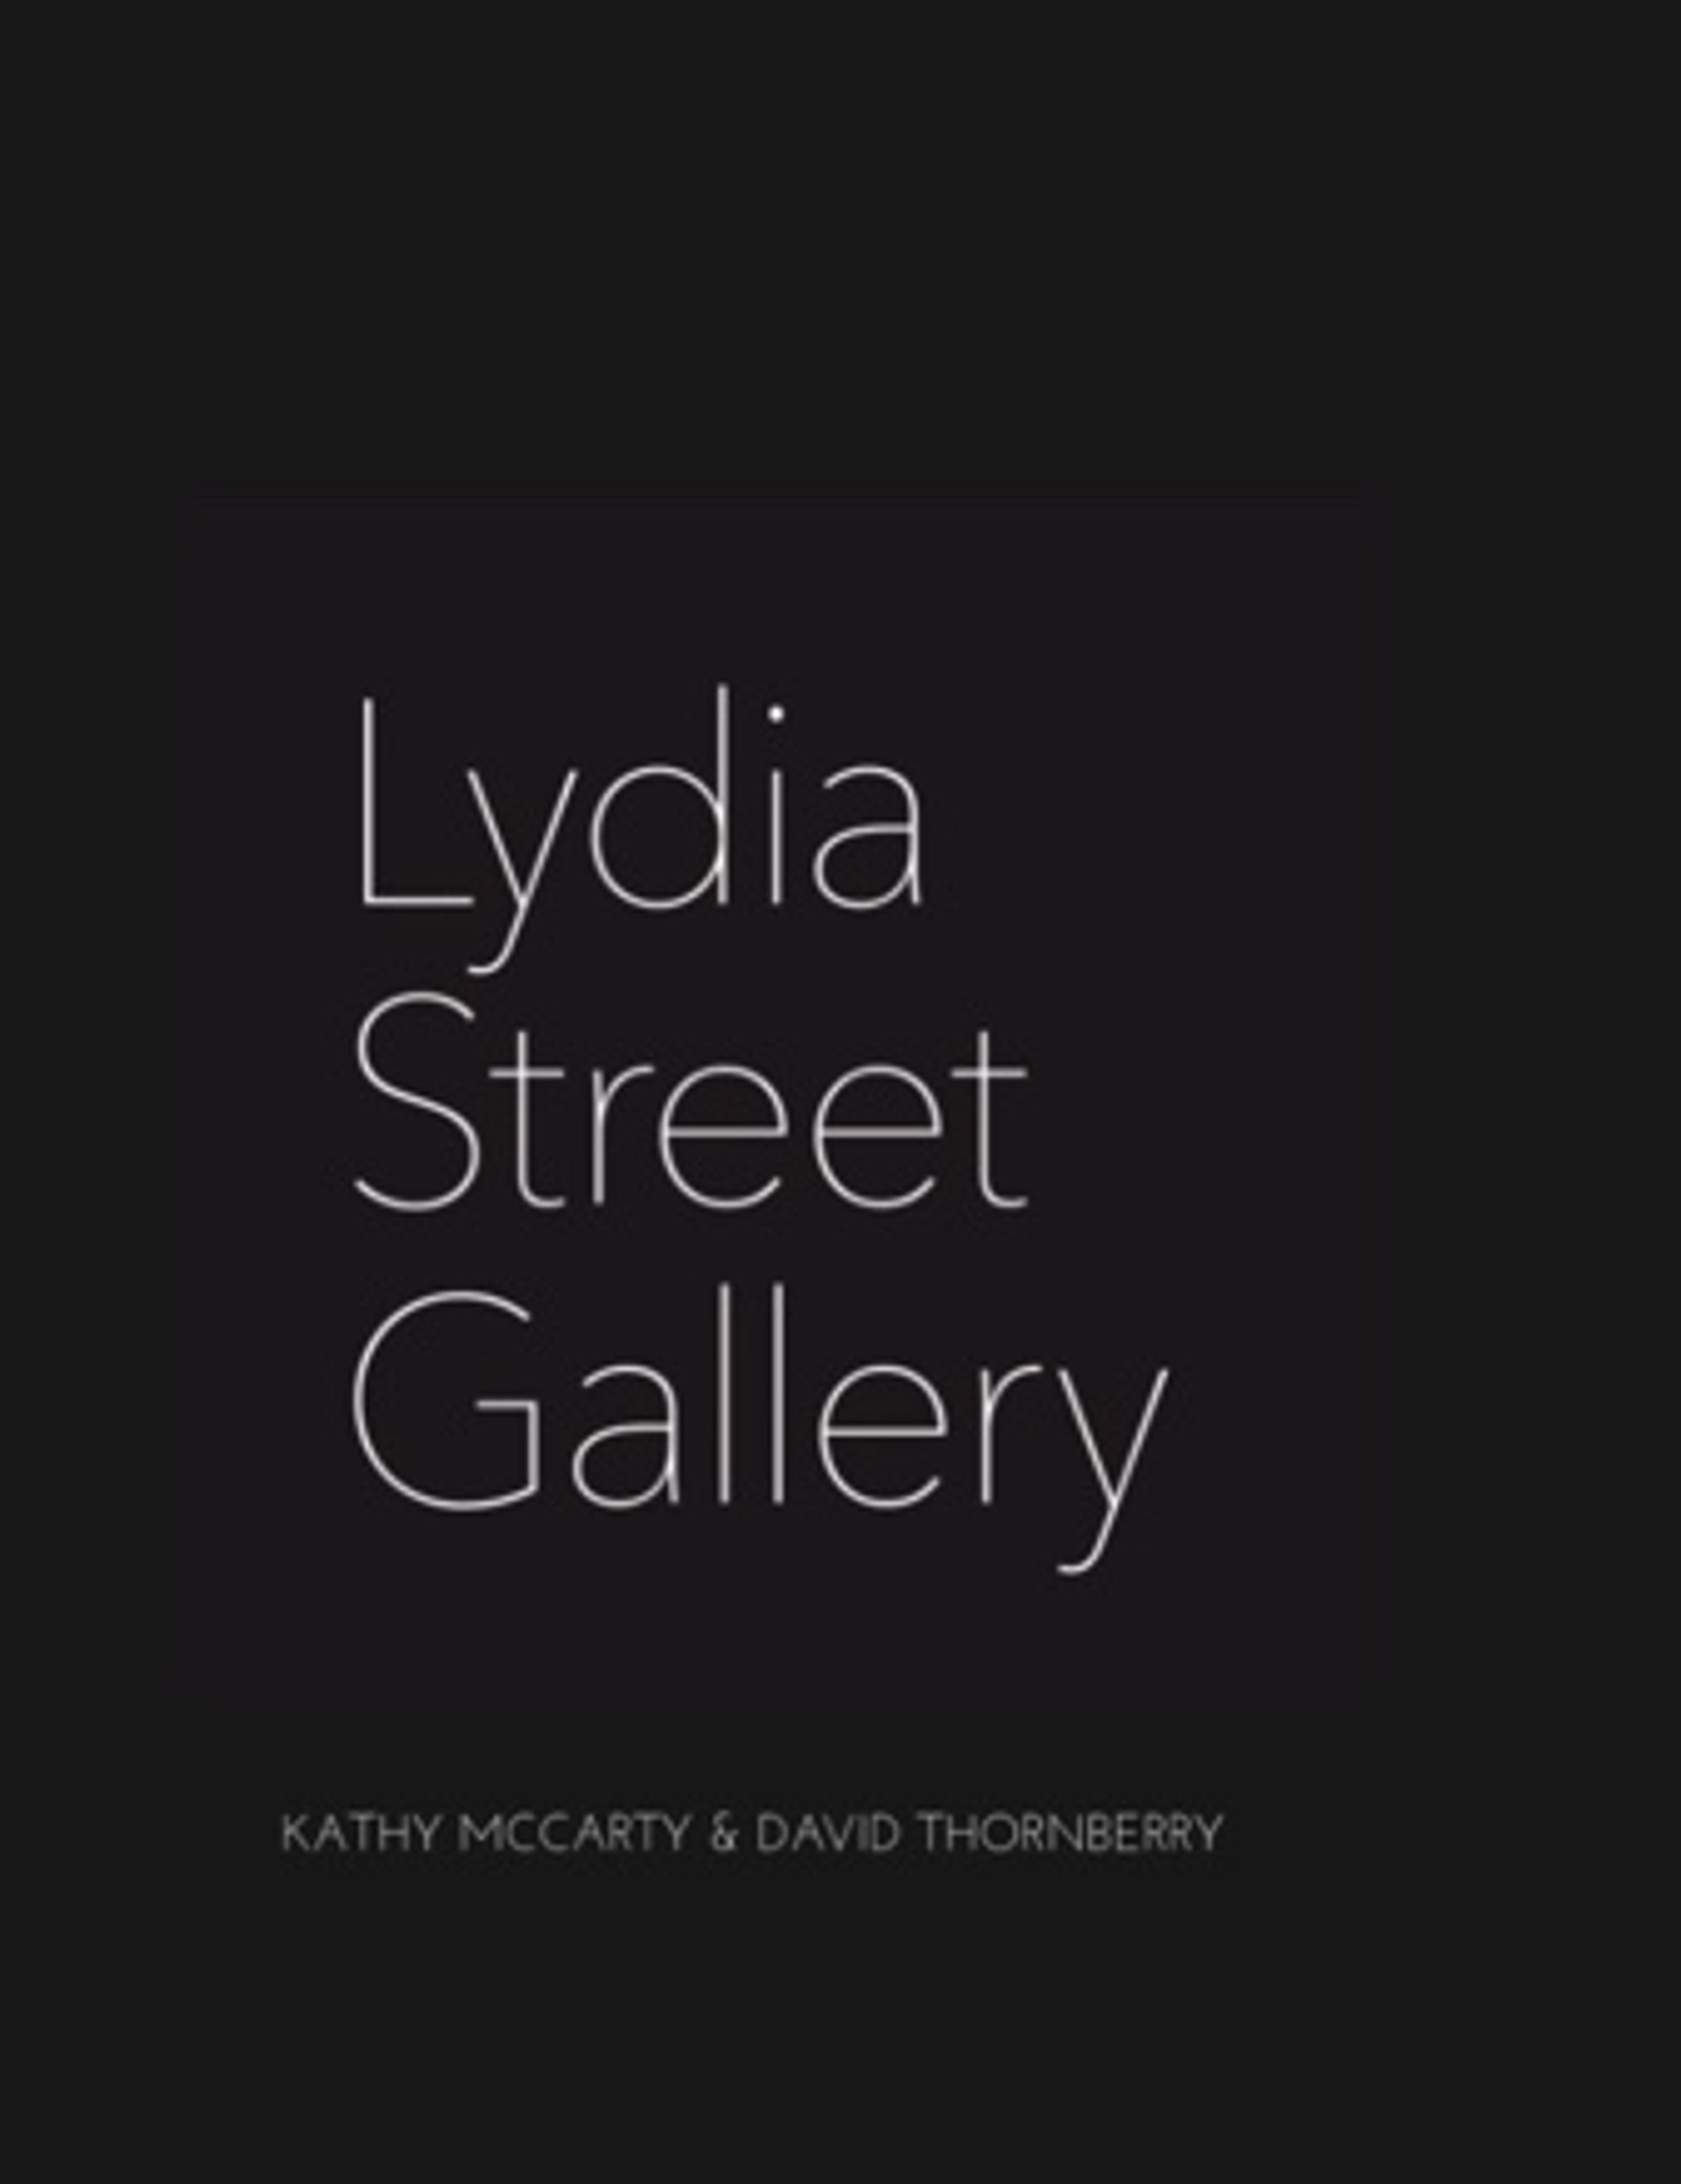 Artist Catalog - Kathy McCarty & David Thornberry by Lydia Street Gallery